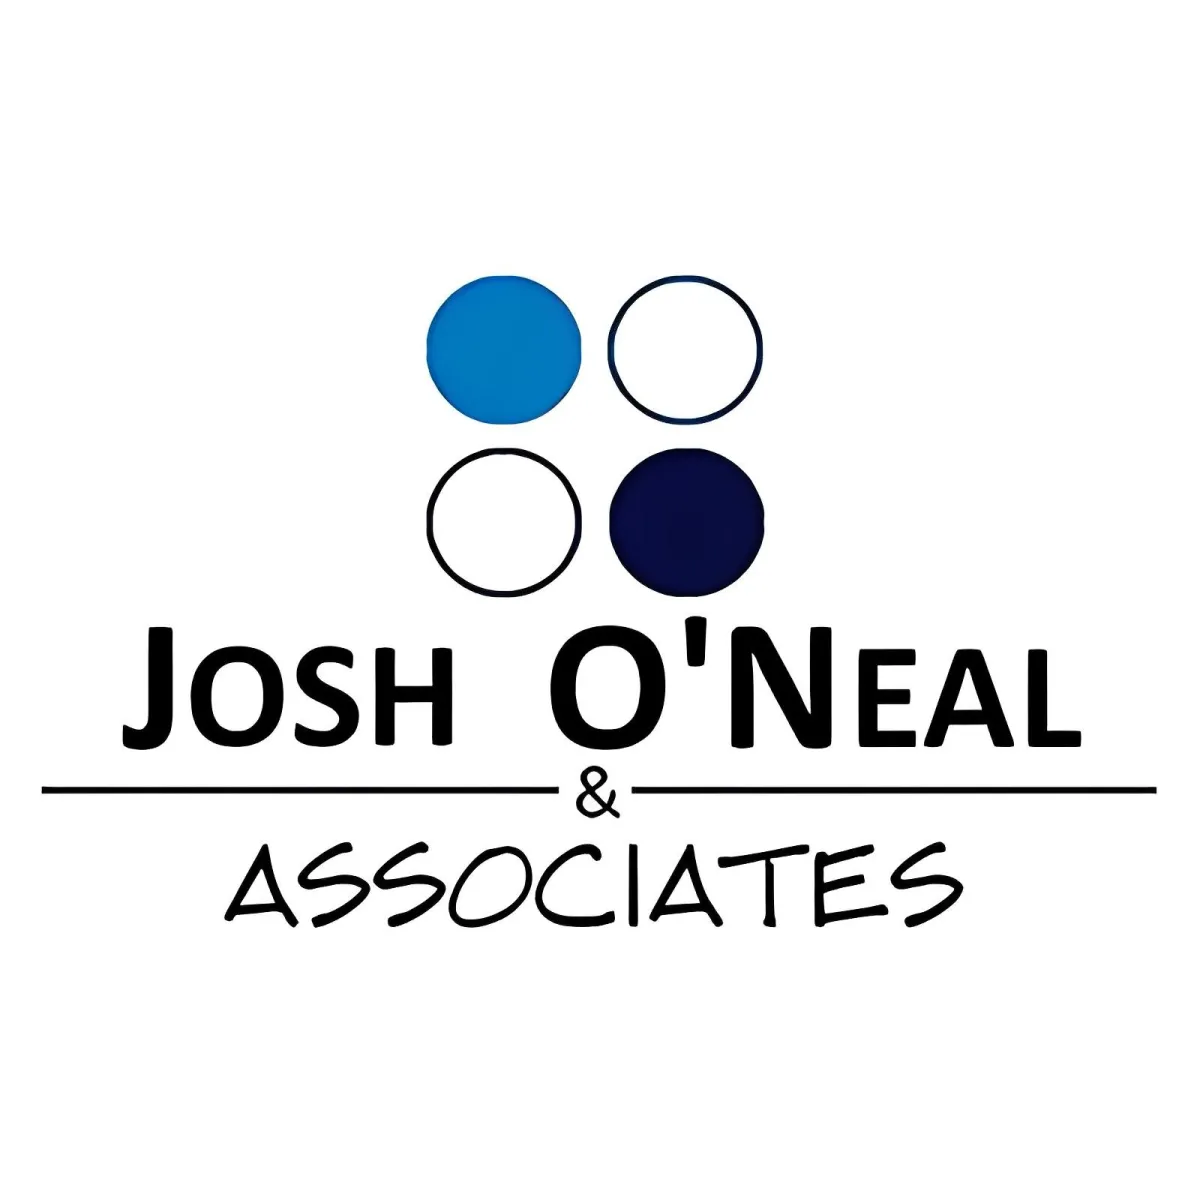 Josh O'Neal & Associates logo